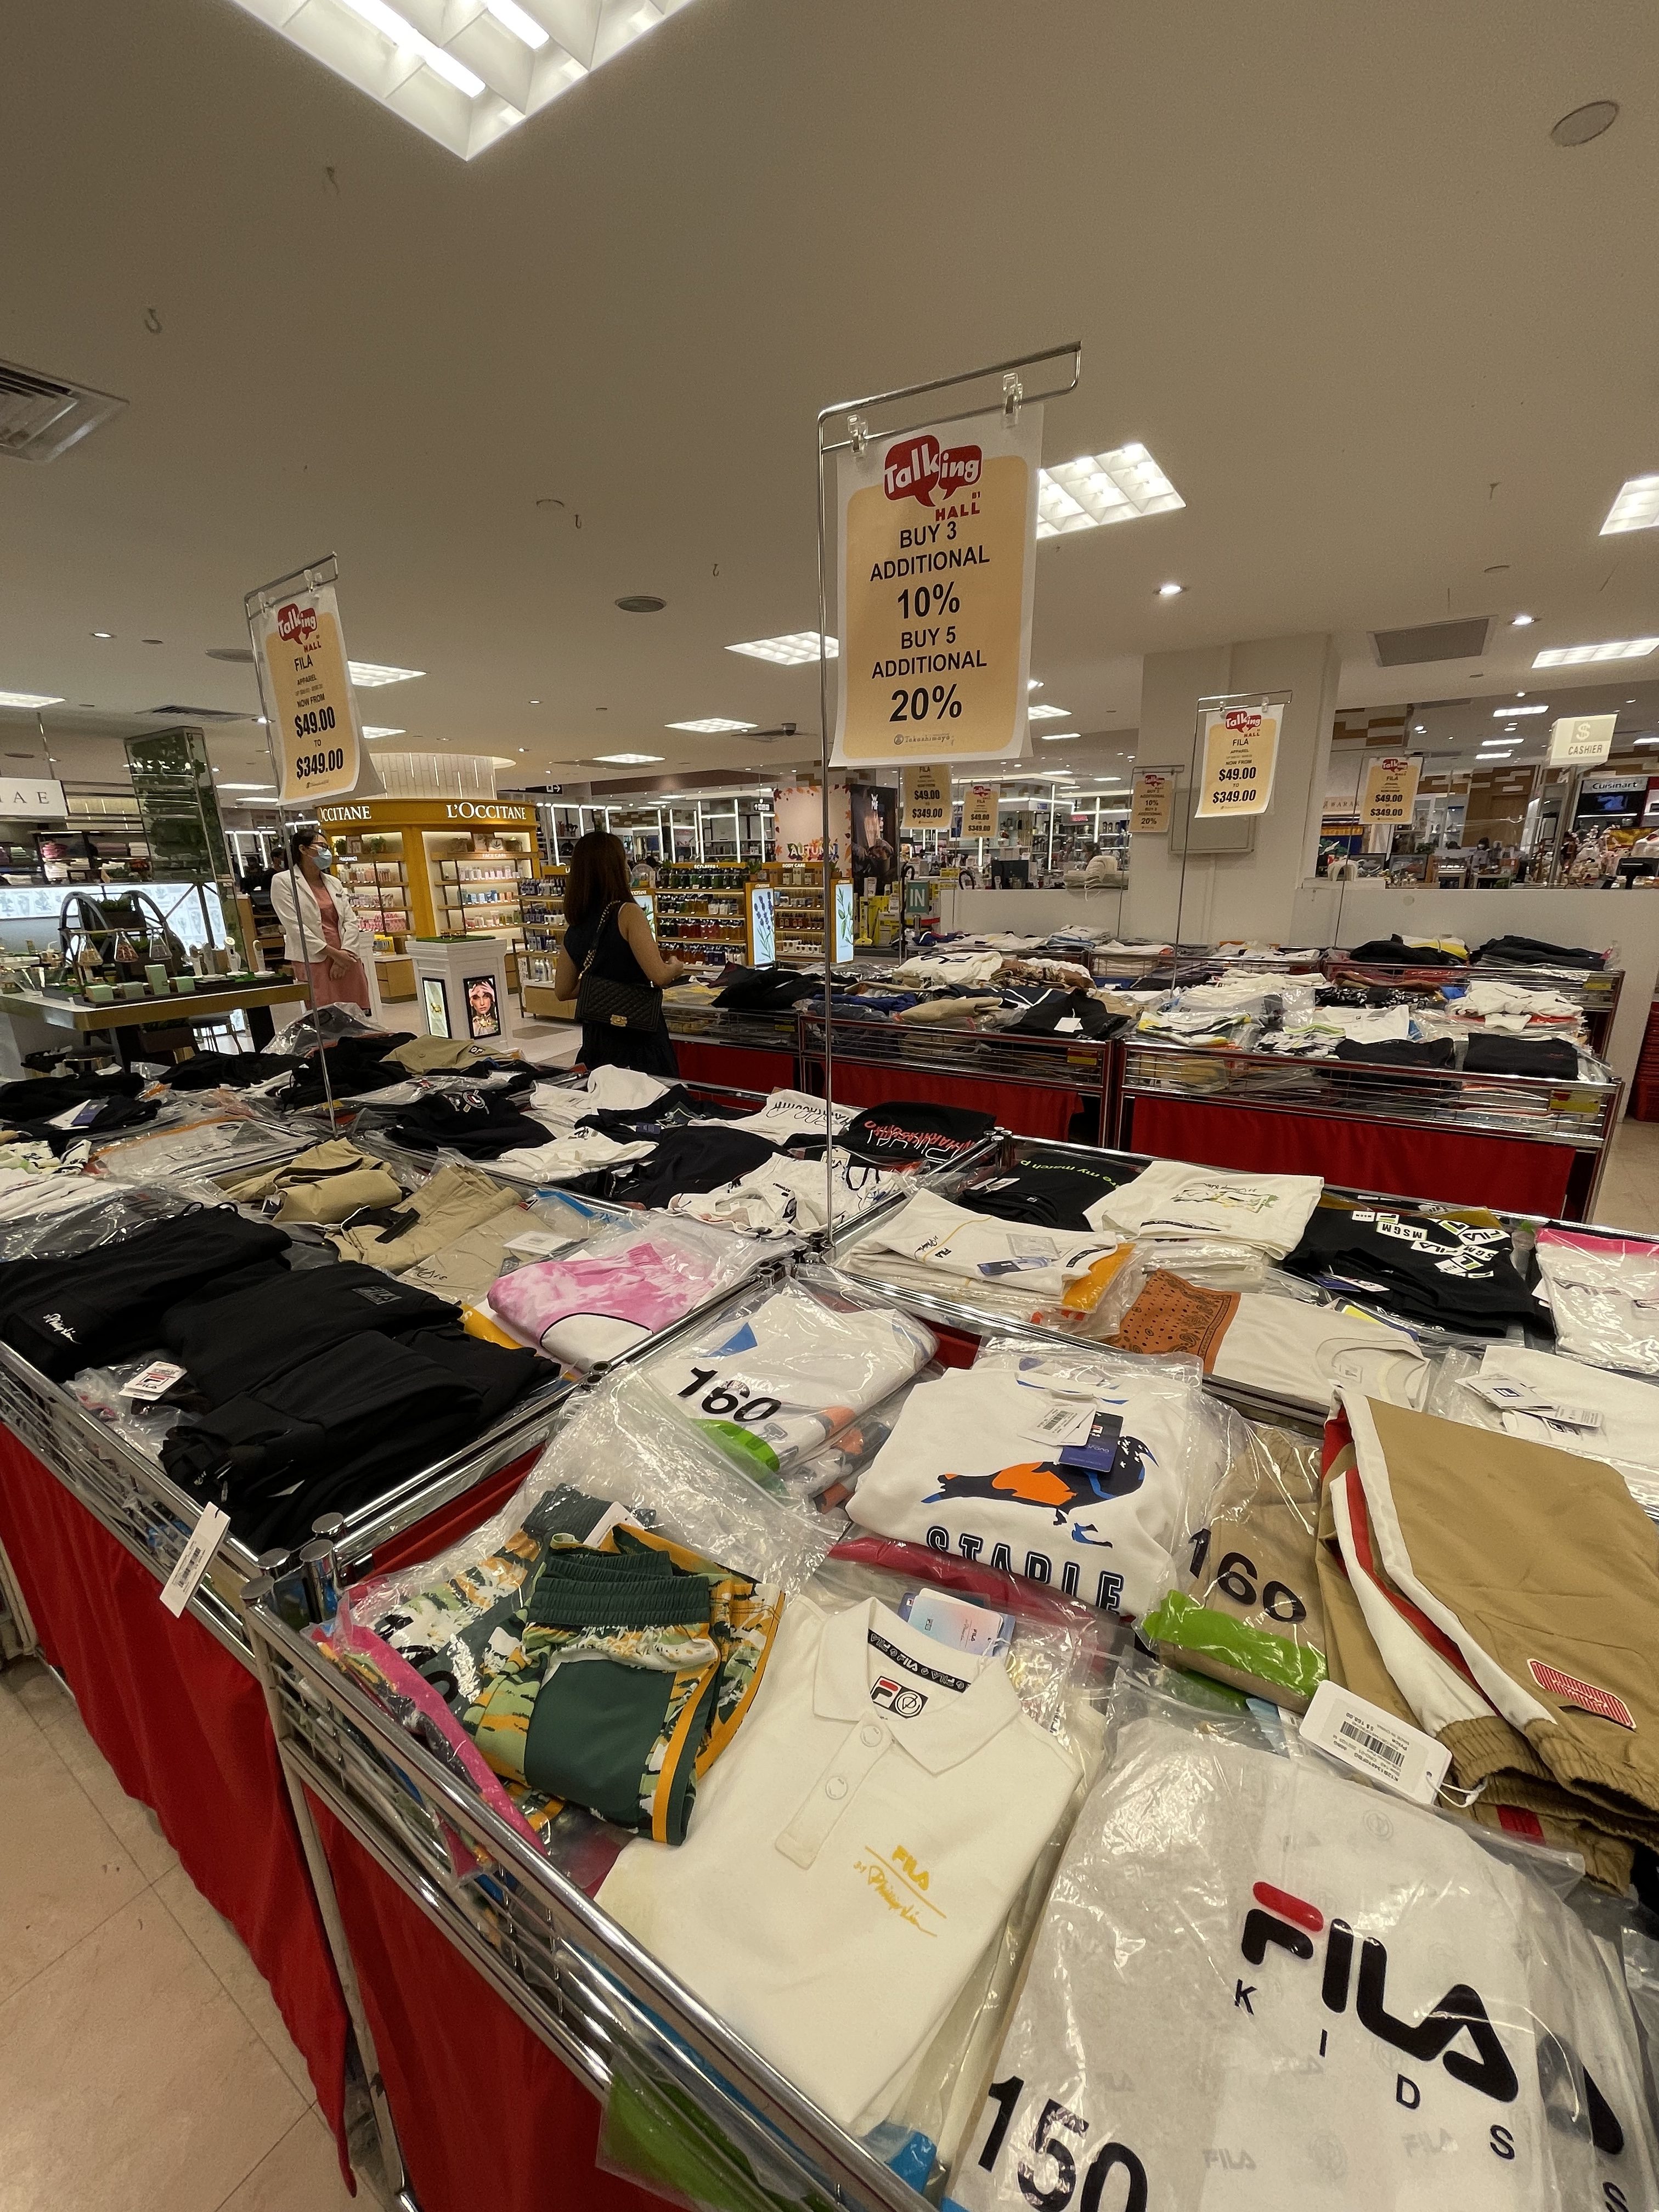 Lobang: Takashimaya has a huge FILA Fair offering up to 50% off footwear and apparels till 31 August 2022. - 25